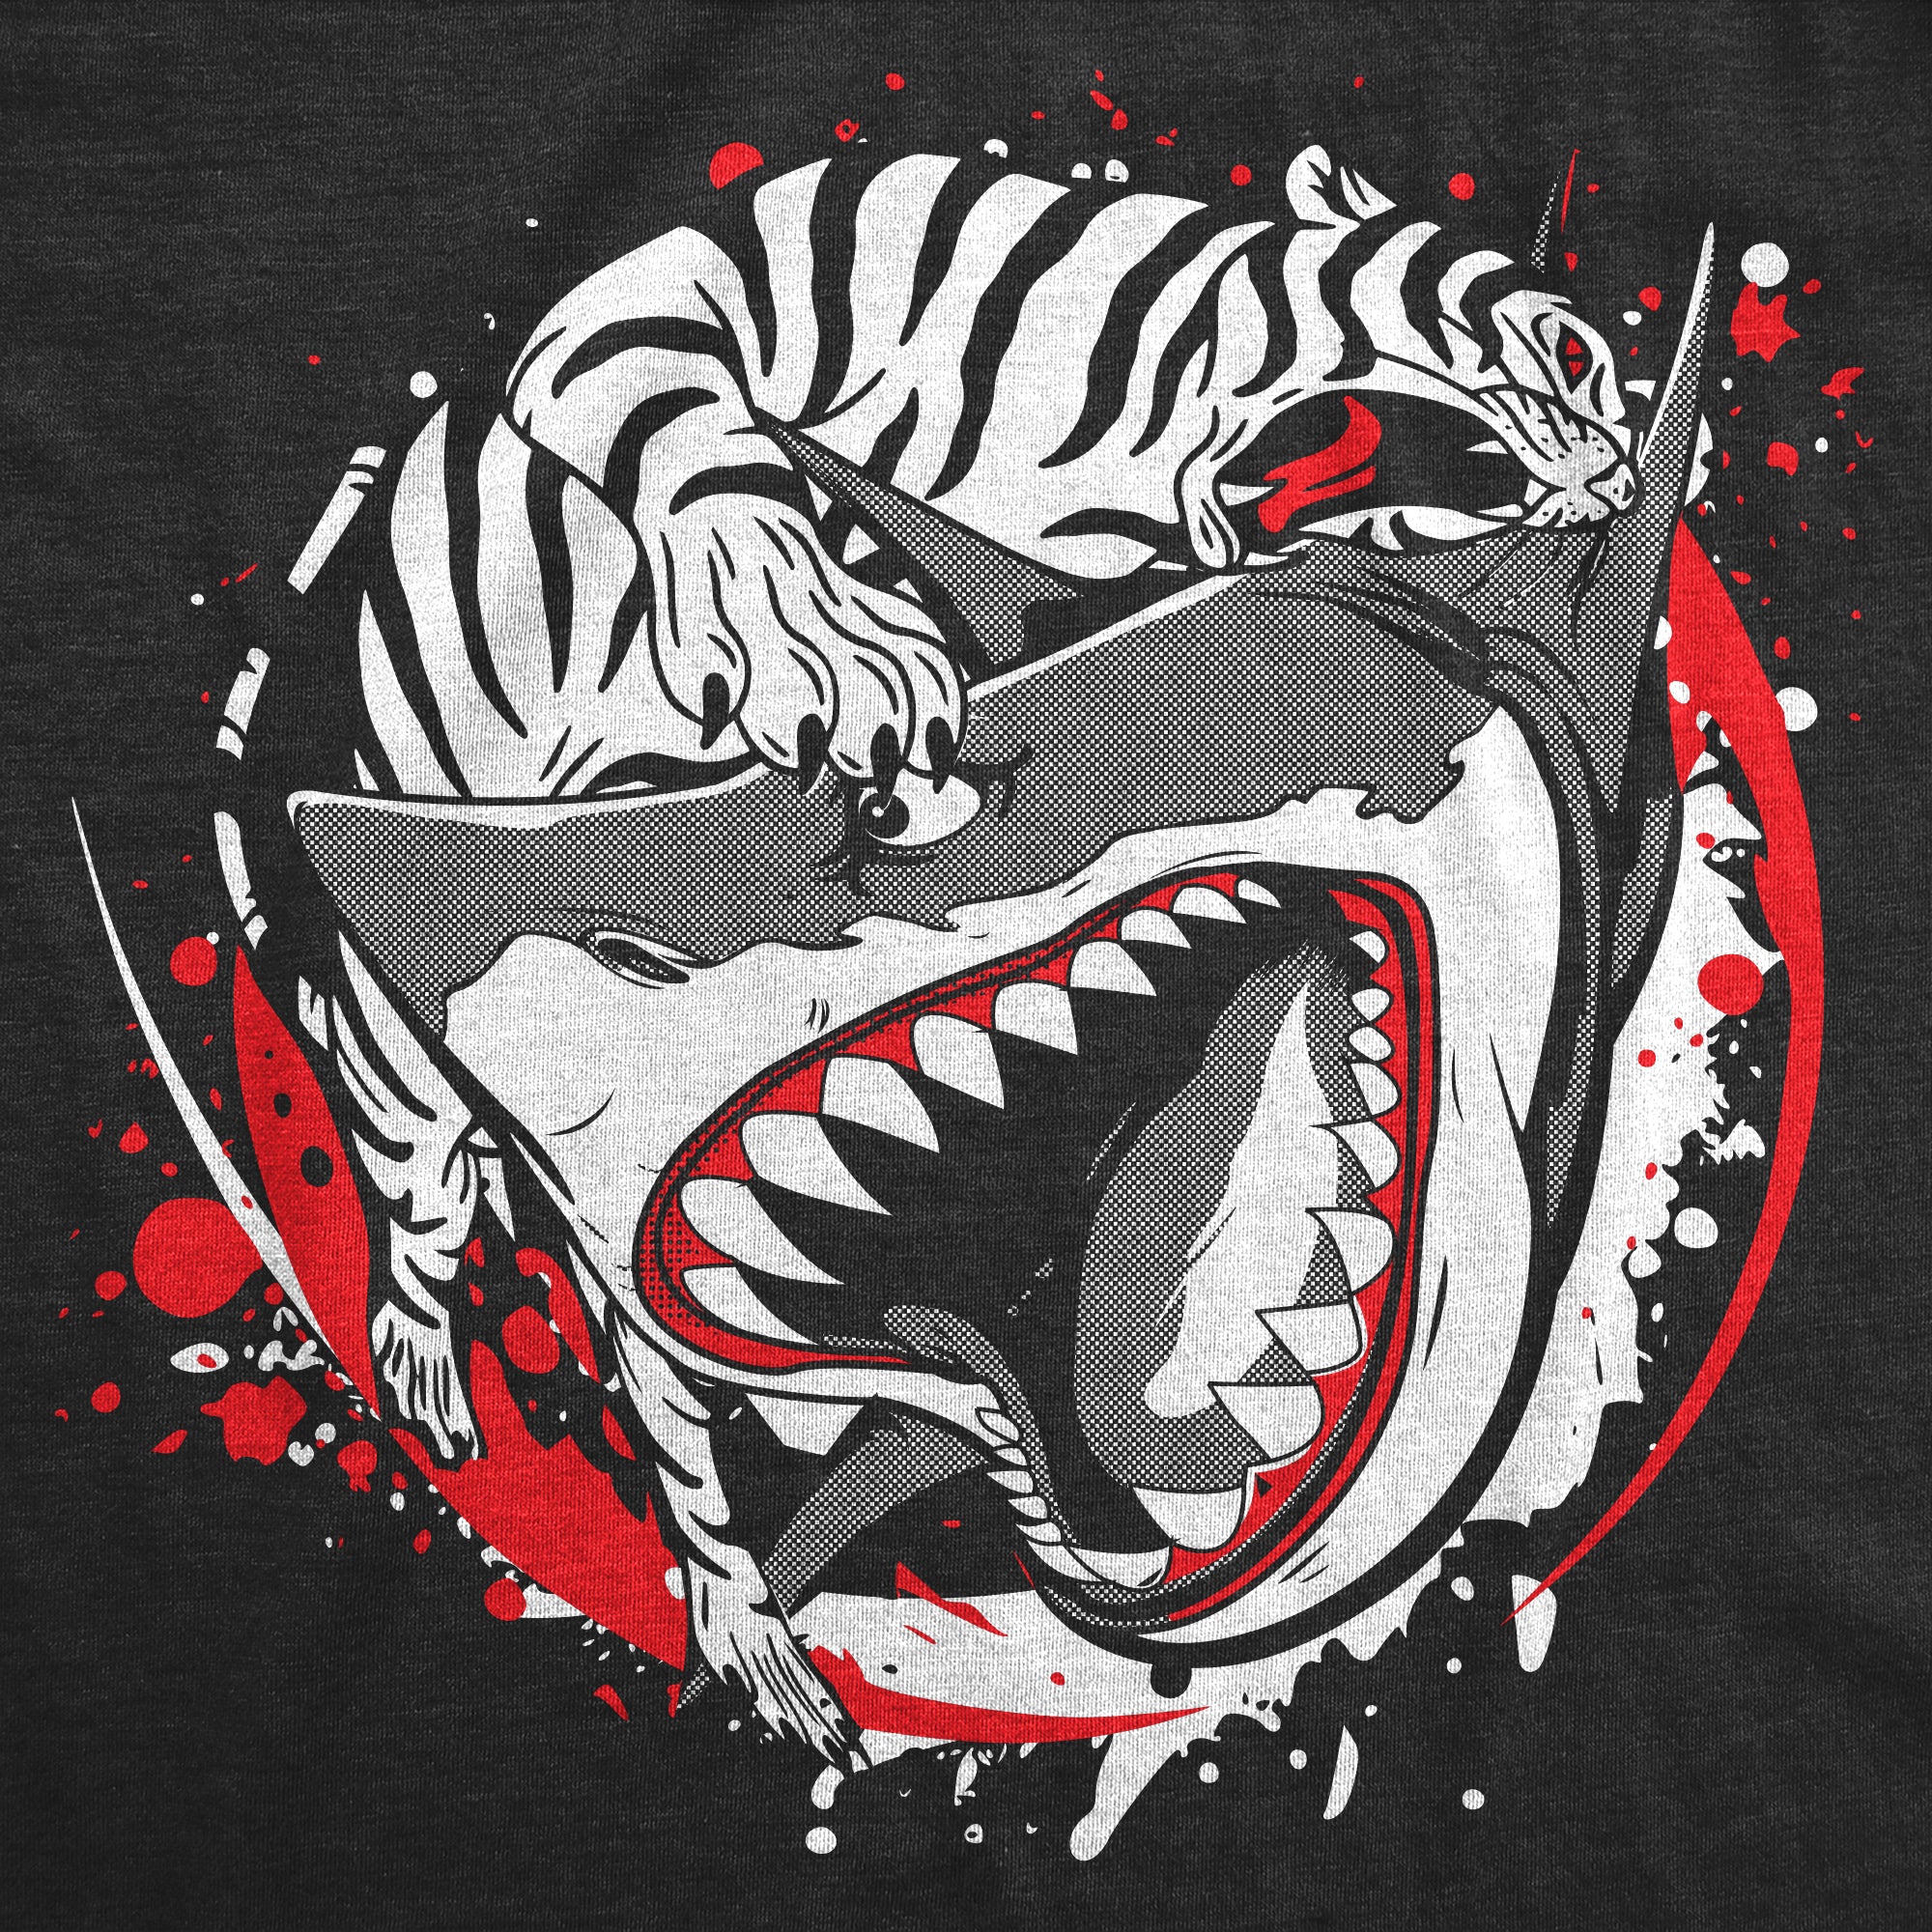 Funny Heather Black - Tiger Shark Ying Yang Tiger Shark Ying Yang Womens T Shirt Nerdy Animal Tee